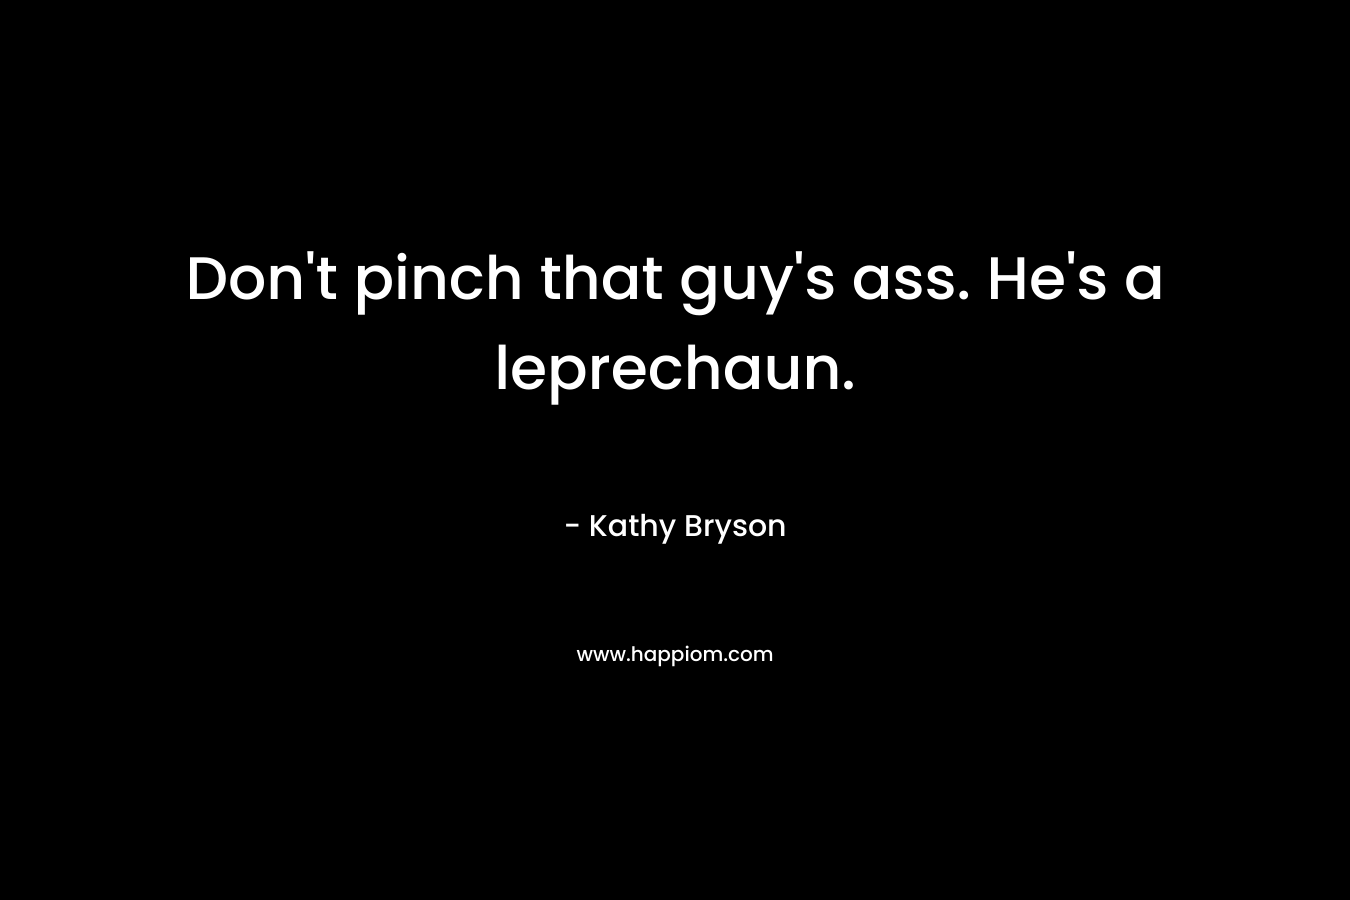 Don't pinch that guy's ass. He's a leprechaun.